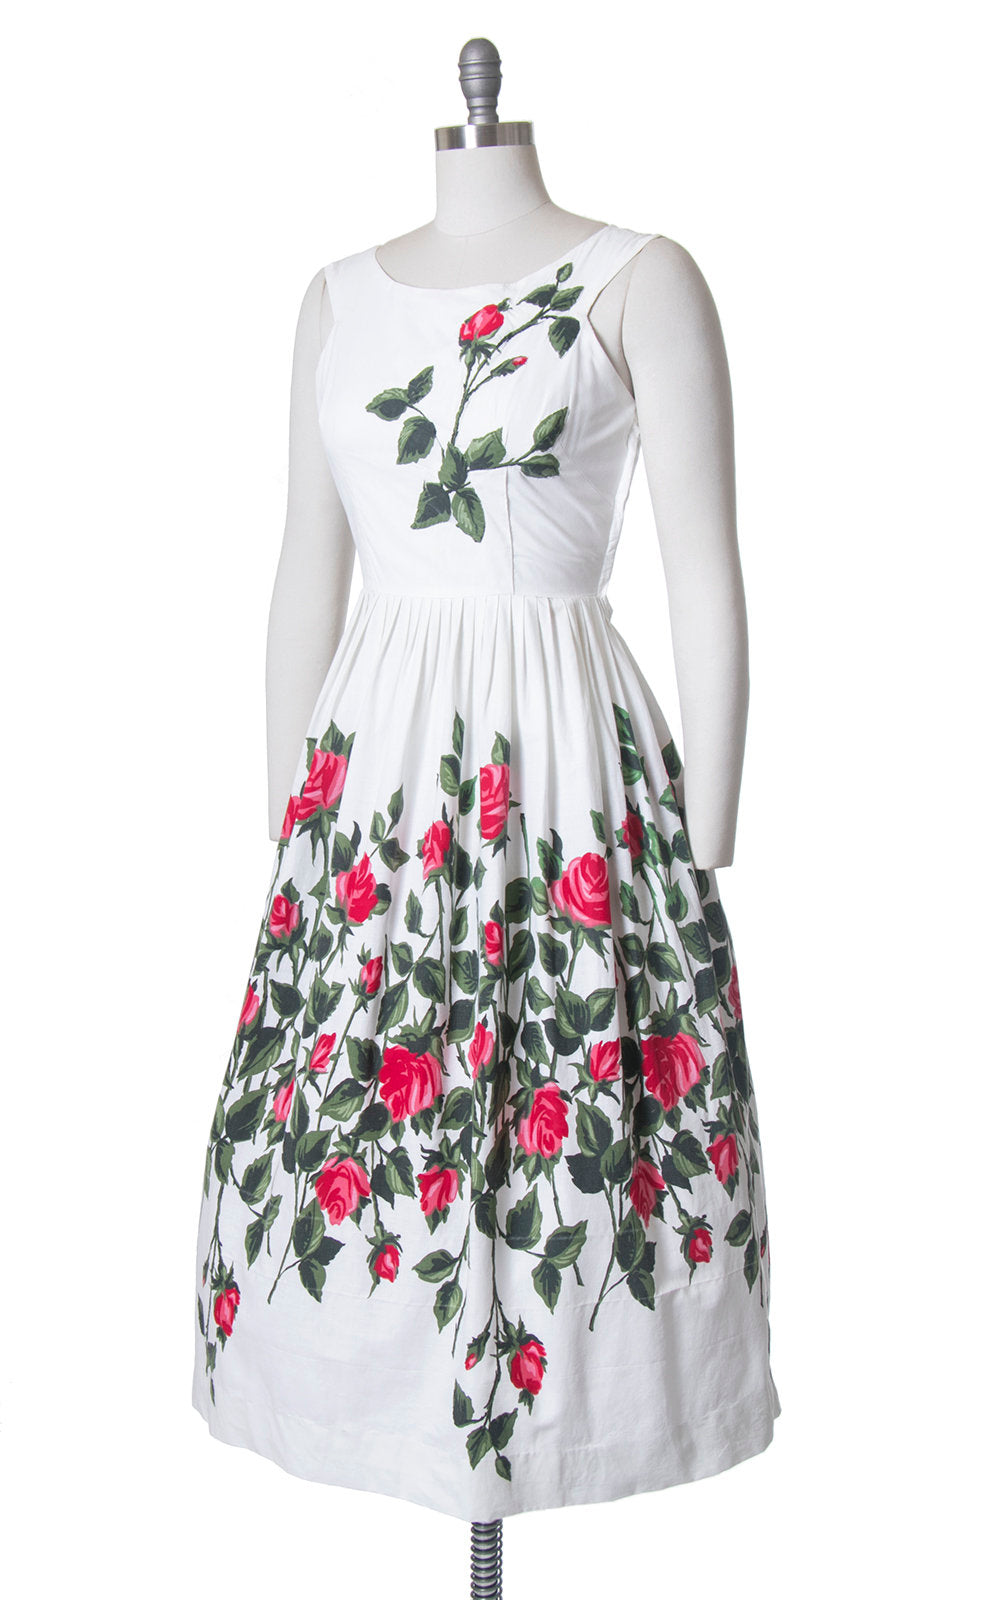 Vintage 1950s Dress | 50s Rose Floral Border Print Cotton Sundress Floral Appliqué White Red Full Skirt Day Dress (medium)